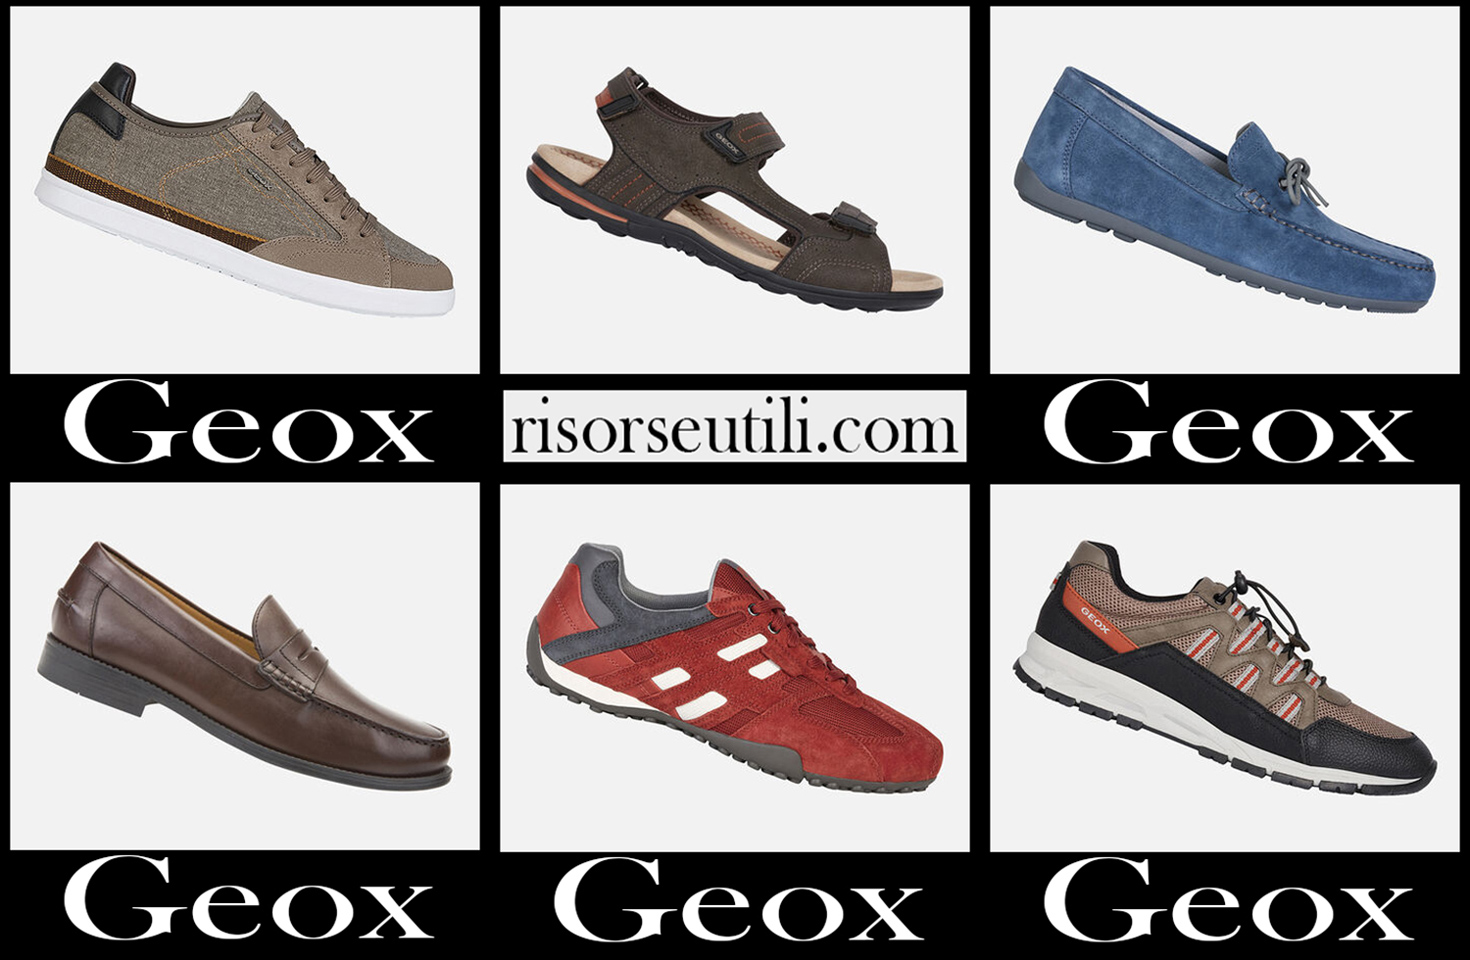 New arrivals Geox shoes 2021 mens footwear look